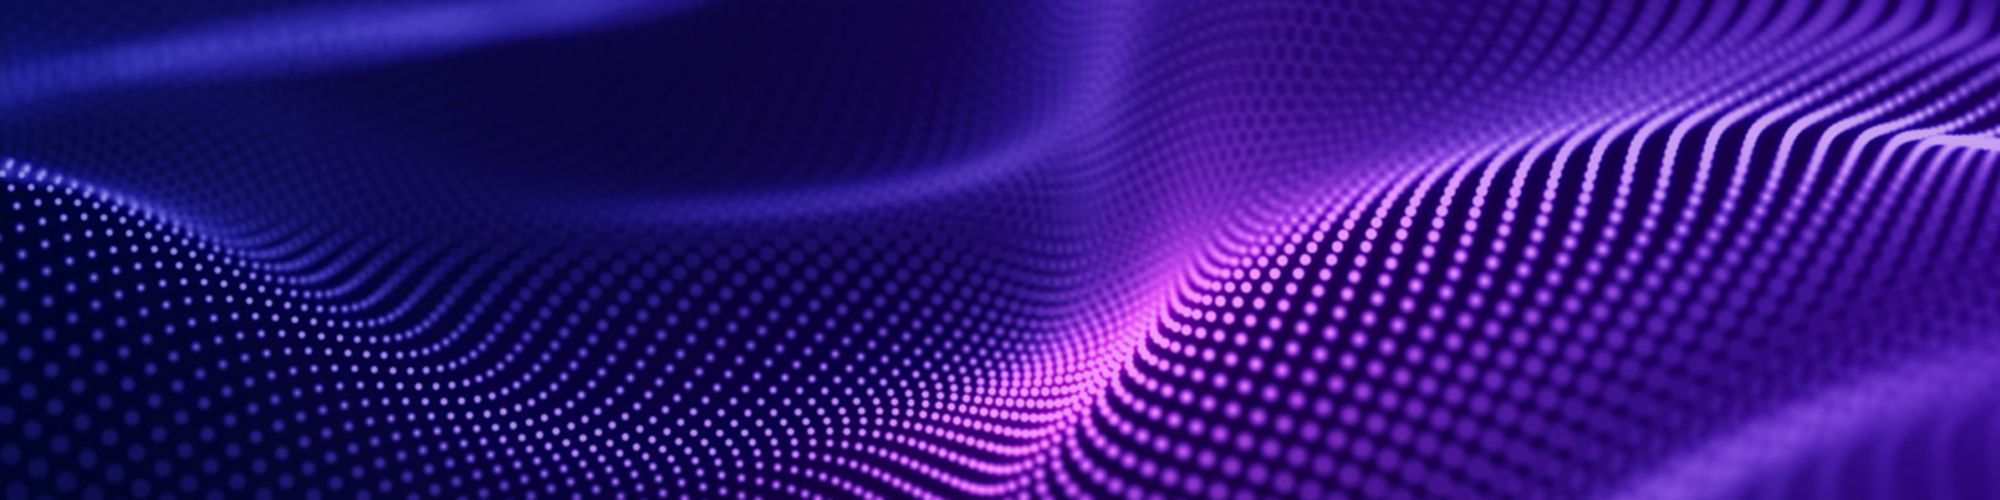 violet virtual lines